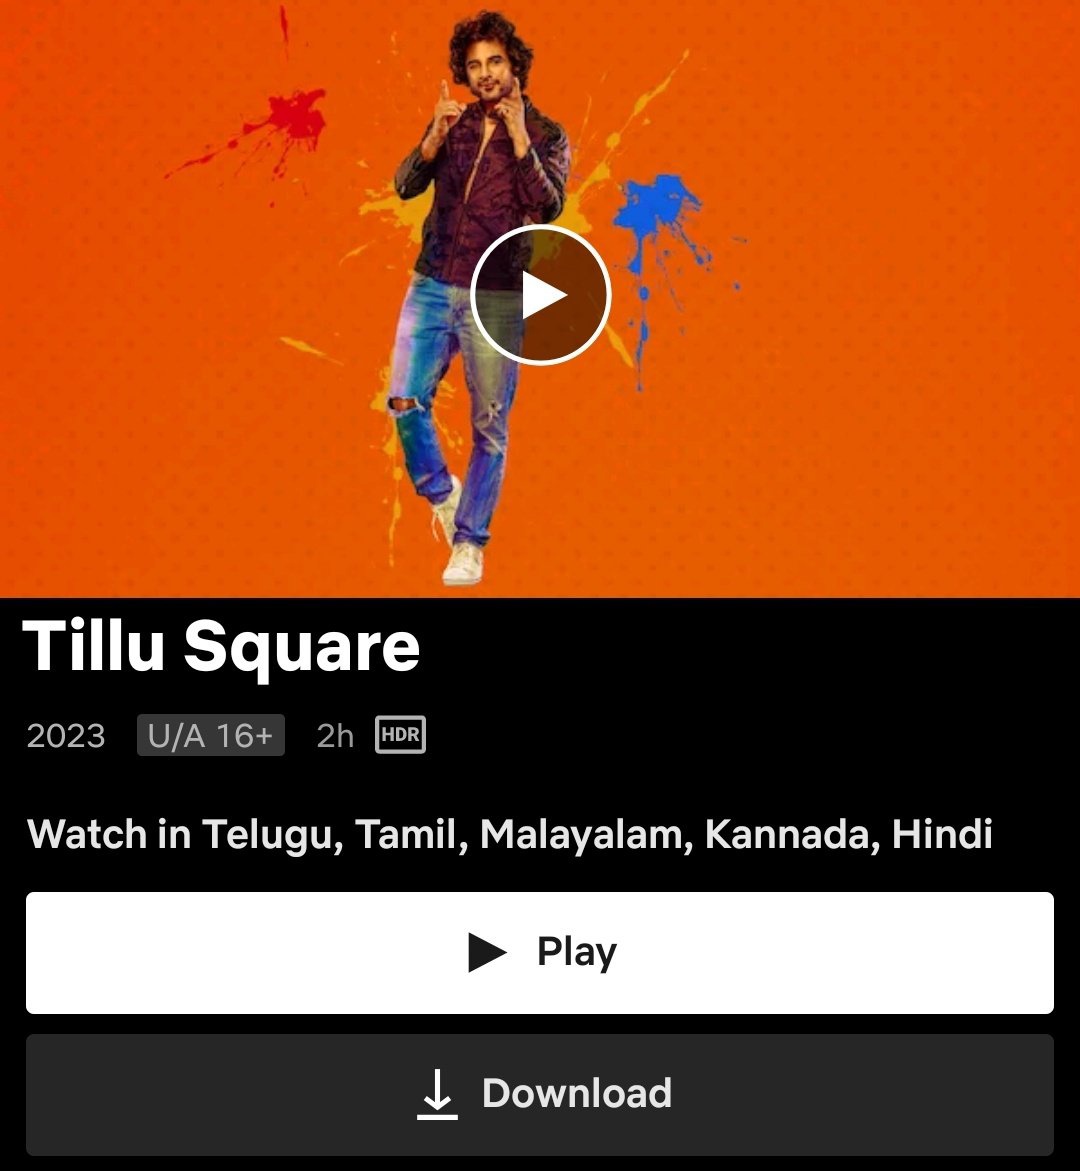 #TilluSquare Now Streaming On #Netflix #TilluSquareonNetflix Star Boy 🌟 #Siddu @anupamahere @MallikRam99 @ram_miriyala @achurajamani @kalyanshankar23 @NavinNooli @vamsi84 @SitharaEnts @Fortune4Cinemas